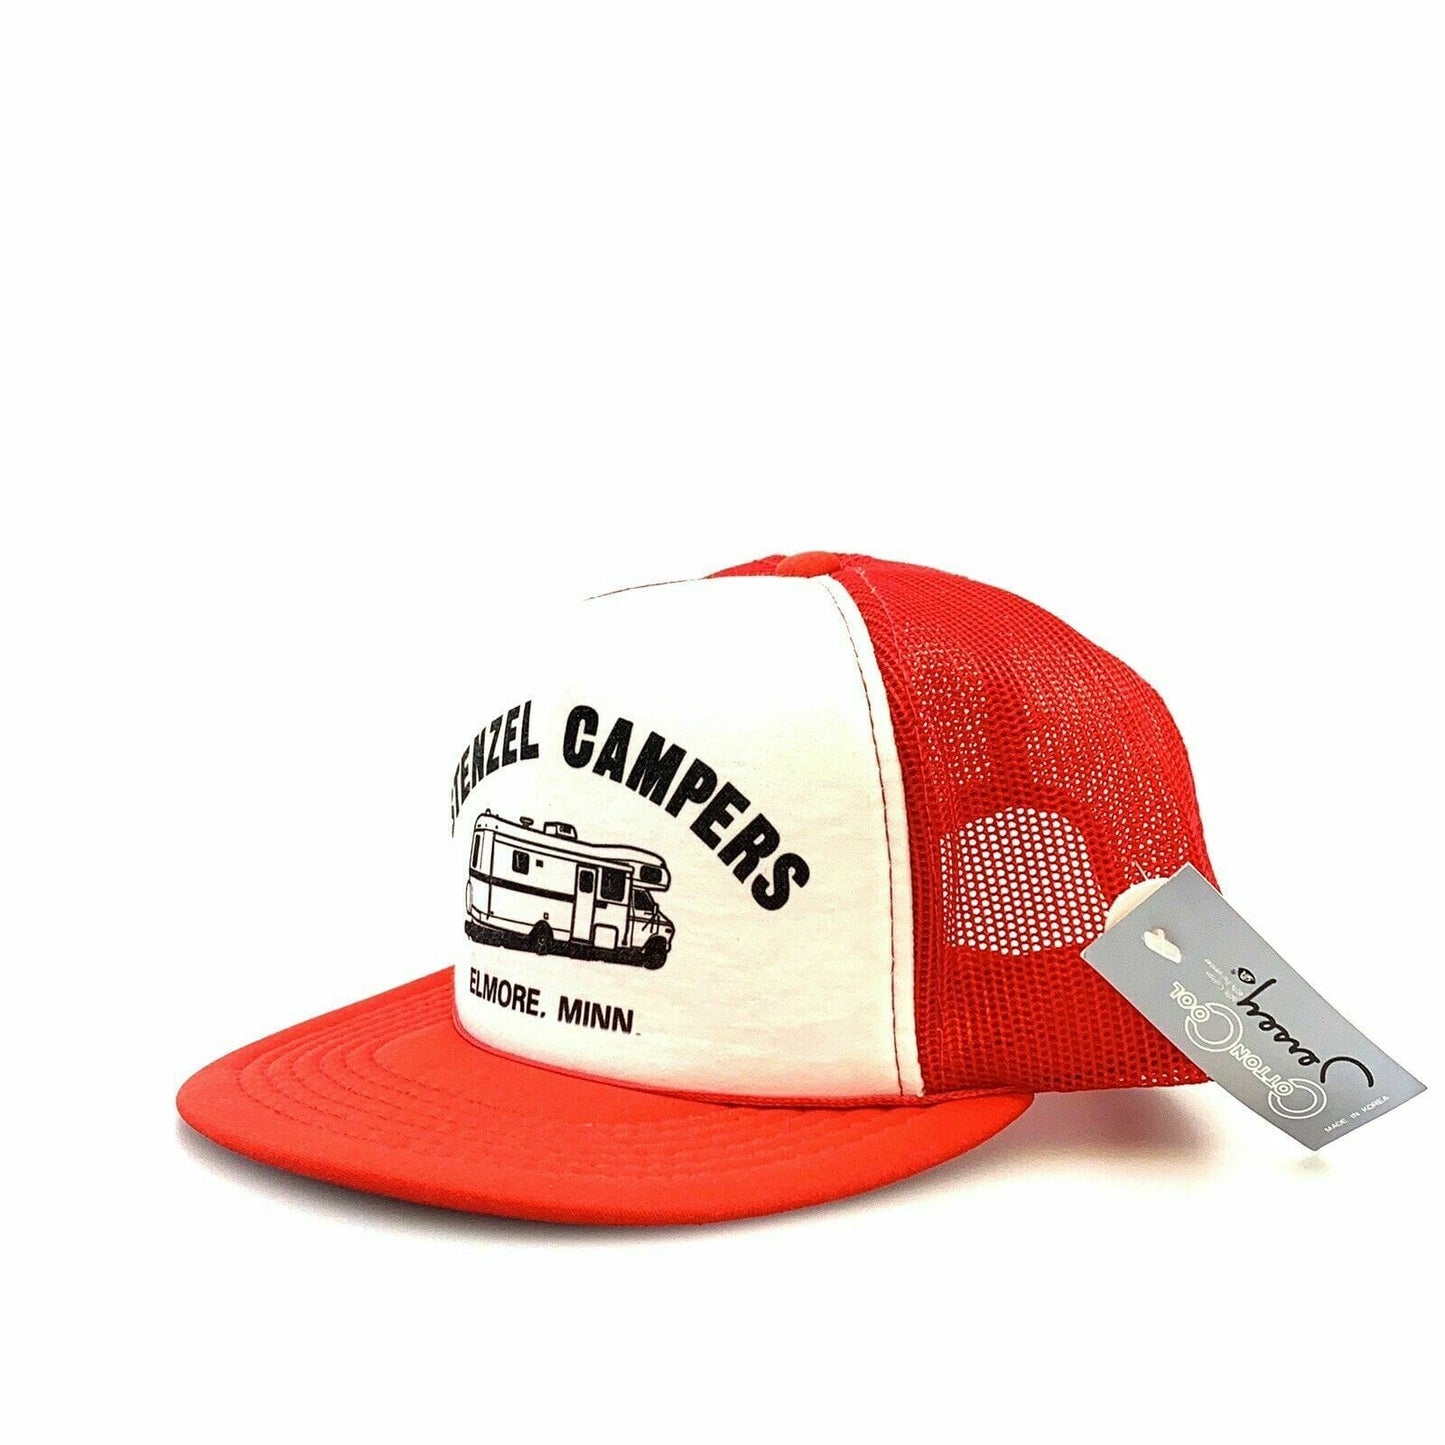 Vintage YoungAn PASO STENZEL CAMPERS Mesh SnapBack Trucker Hat, Gray - Adjustable